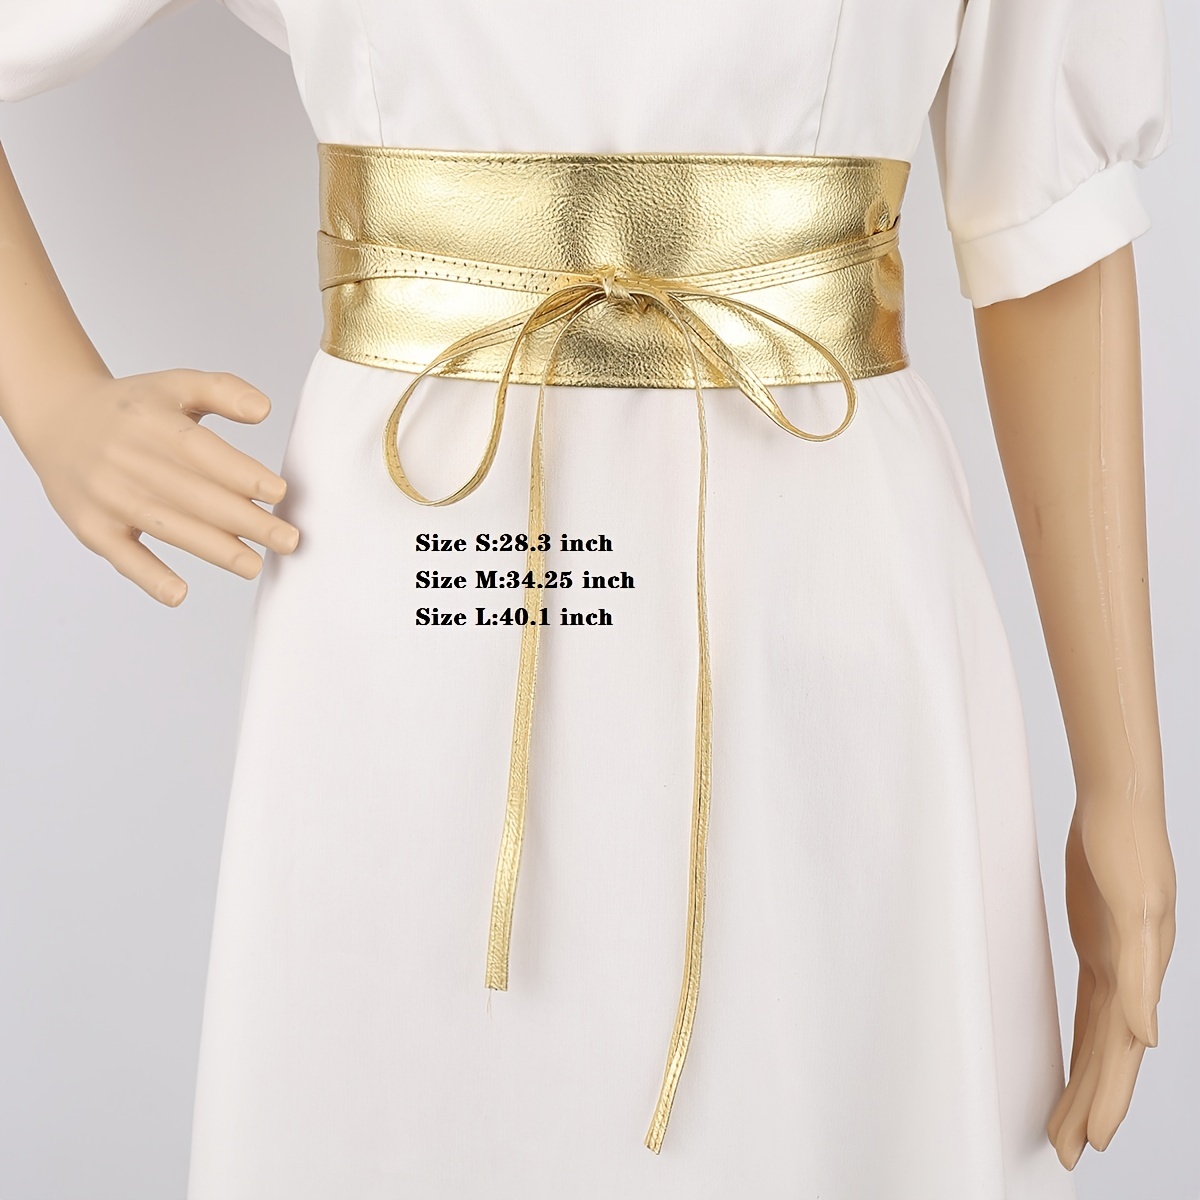 High Waist Ribbon Tie Pants - Camel – Fashion House Boutique